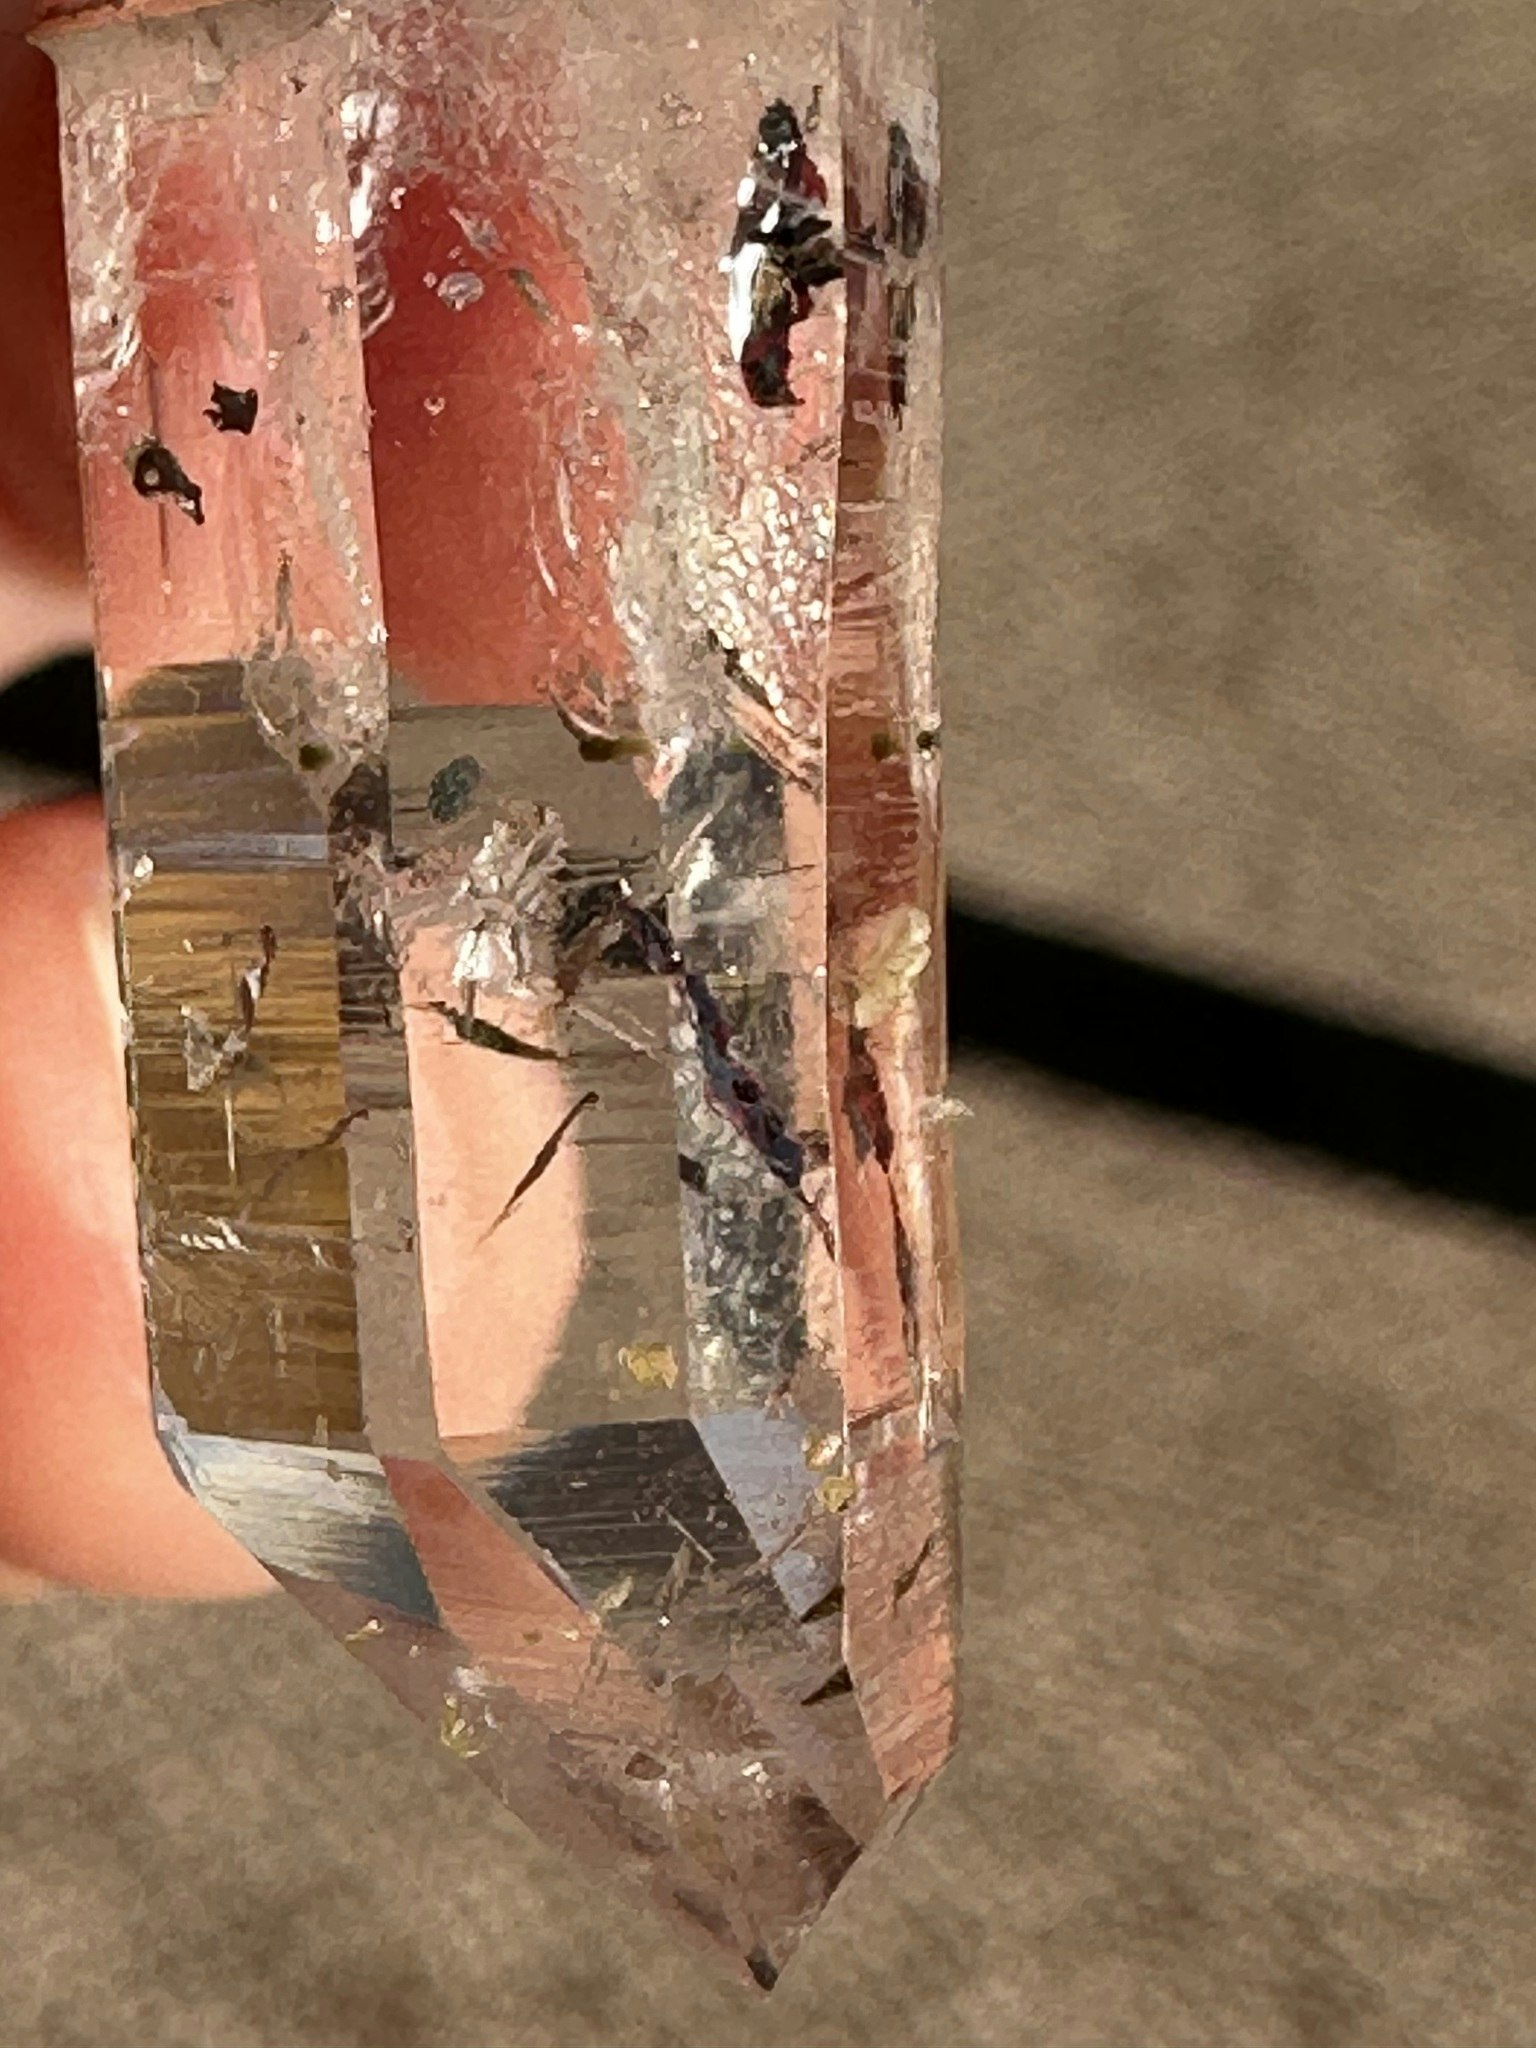 Velo opal with Brandenberg quartz crystal